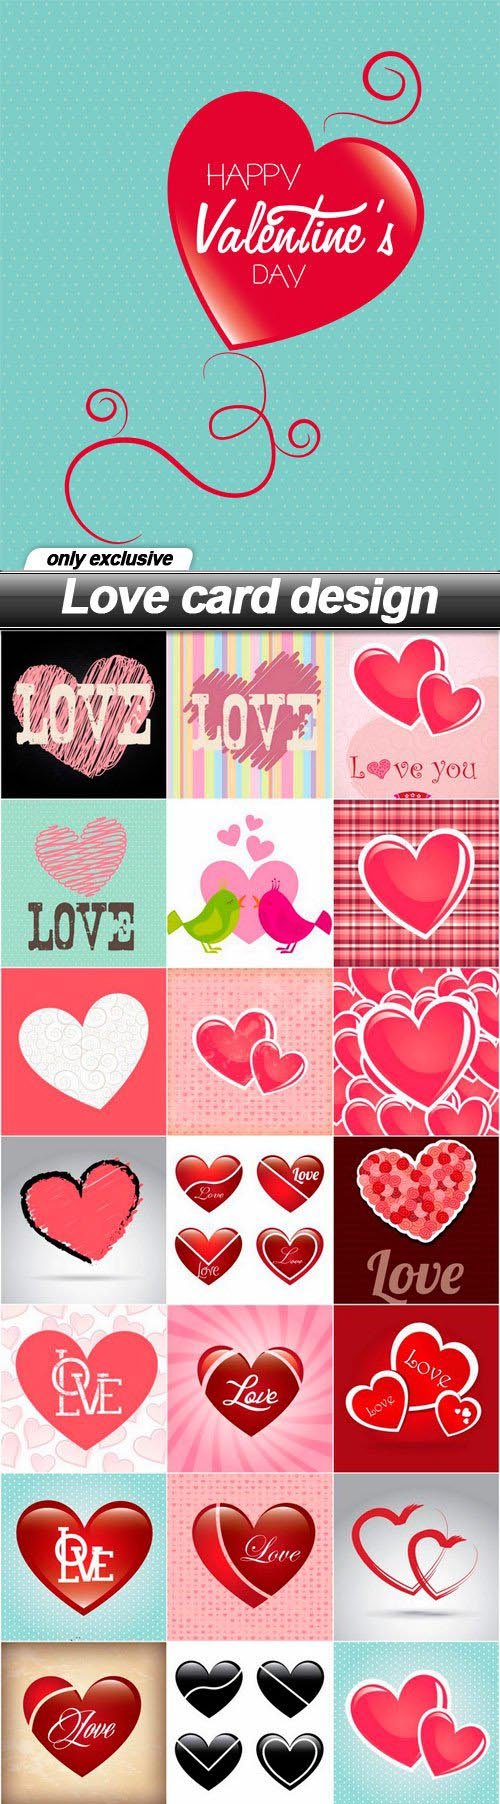 Love card design - 25 EPS